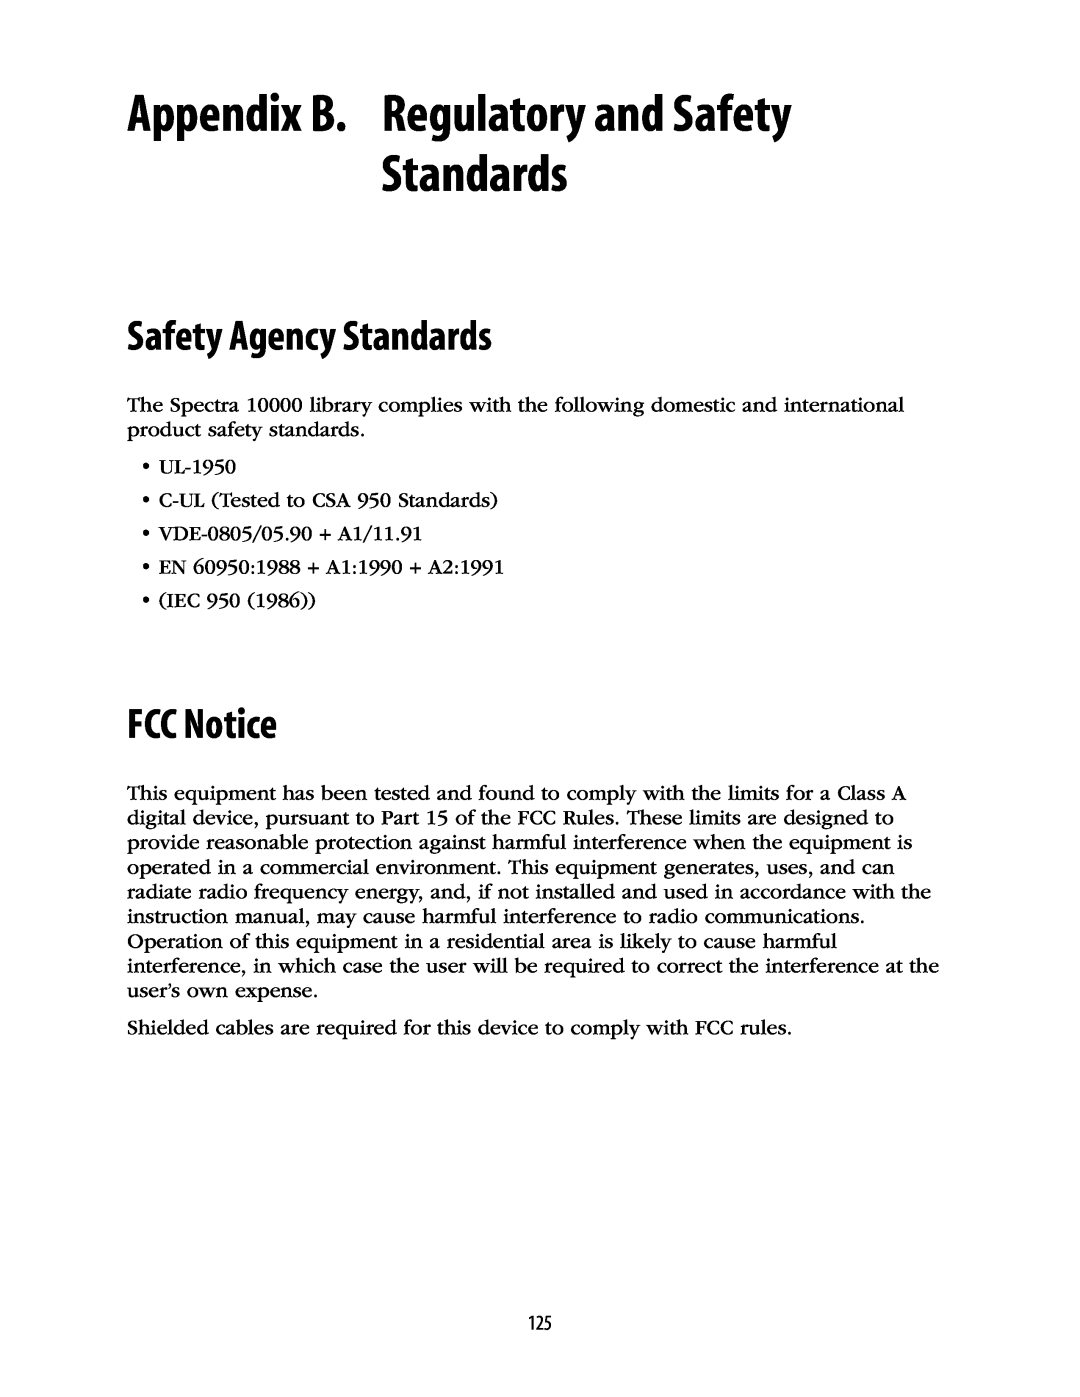 Spectra Logic 10000 manual Appendix B. Regulatory and Safety Standards, Safety Agency Standards, FCC Notice 